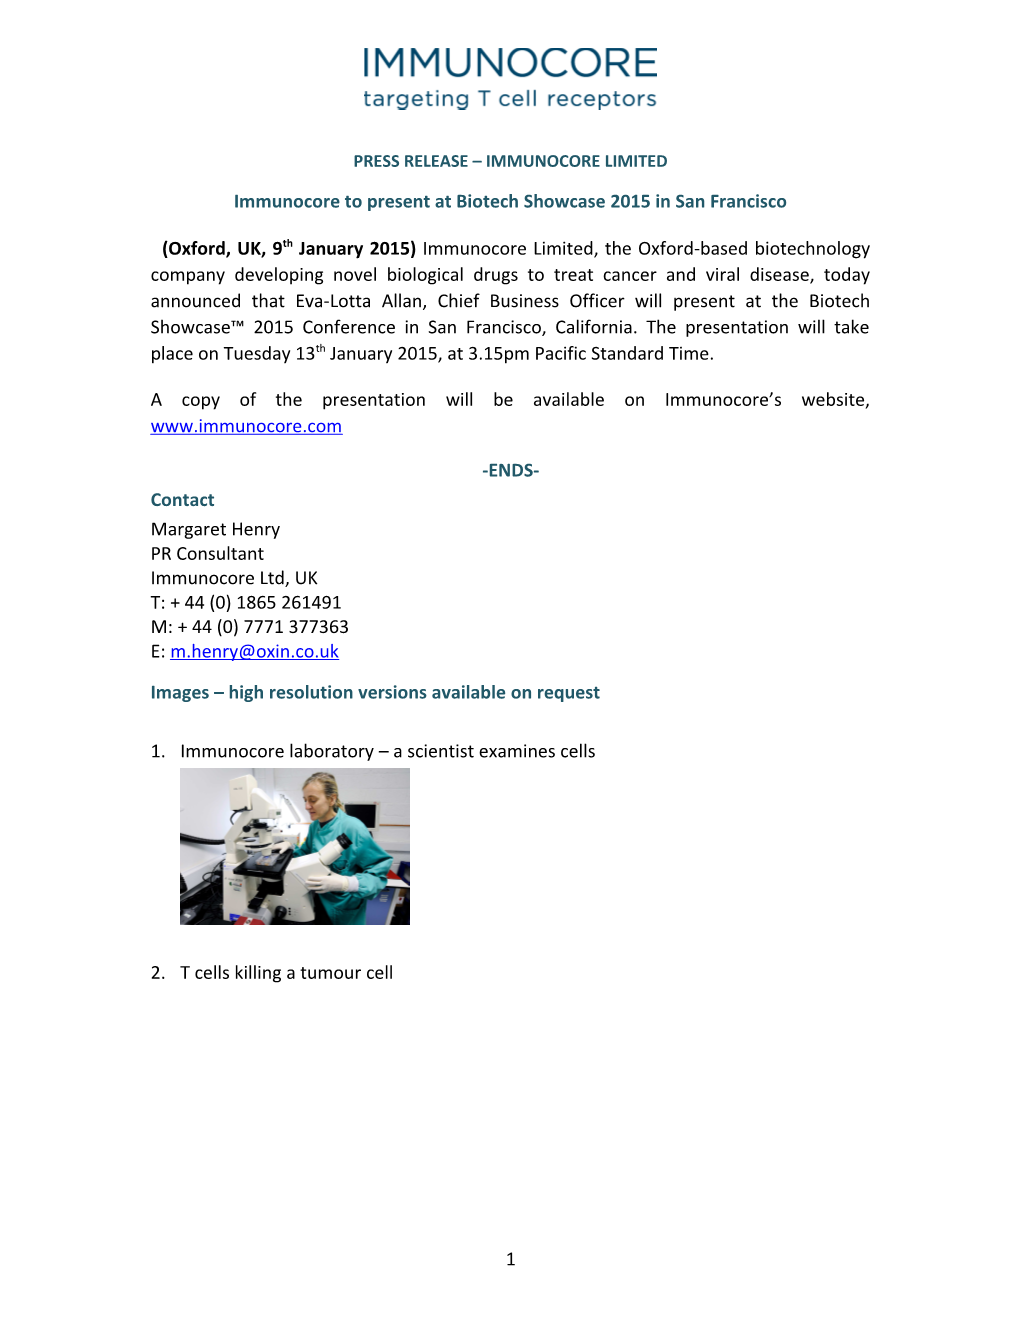 Press Release Immunocore Limited